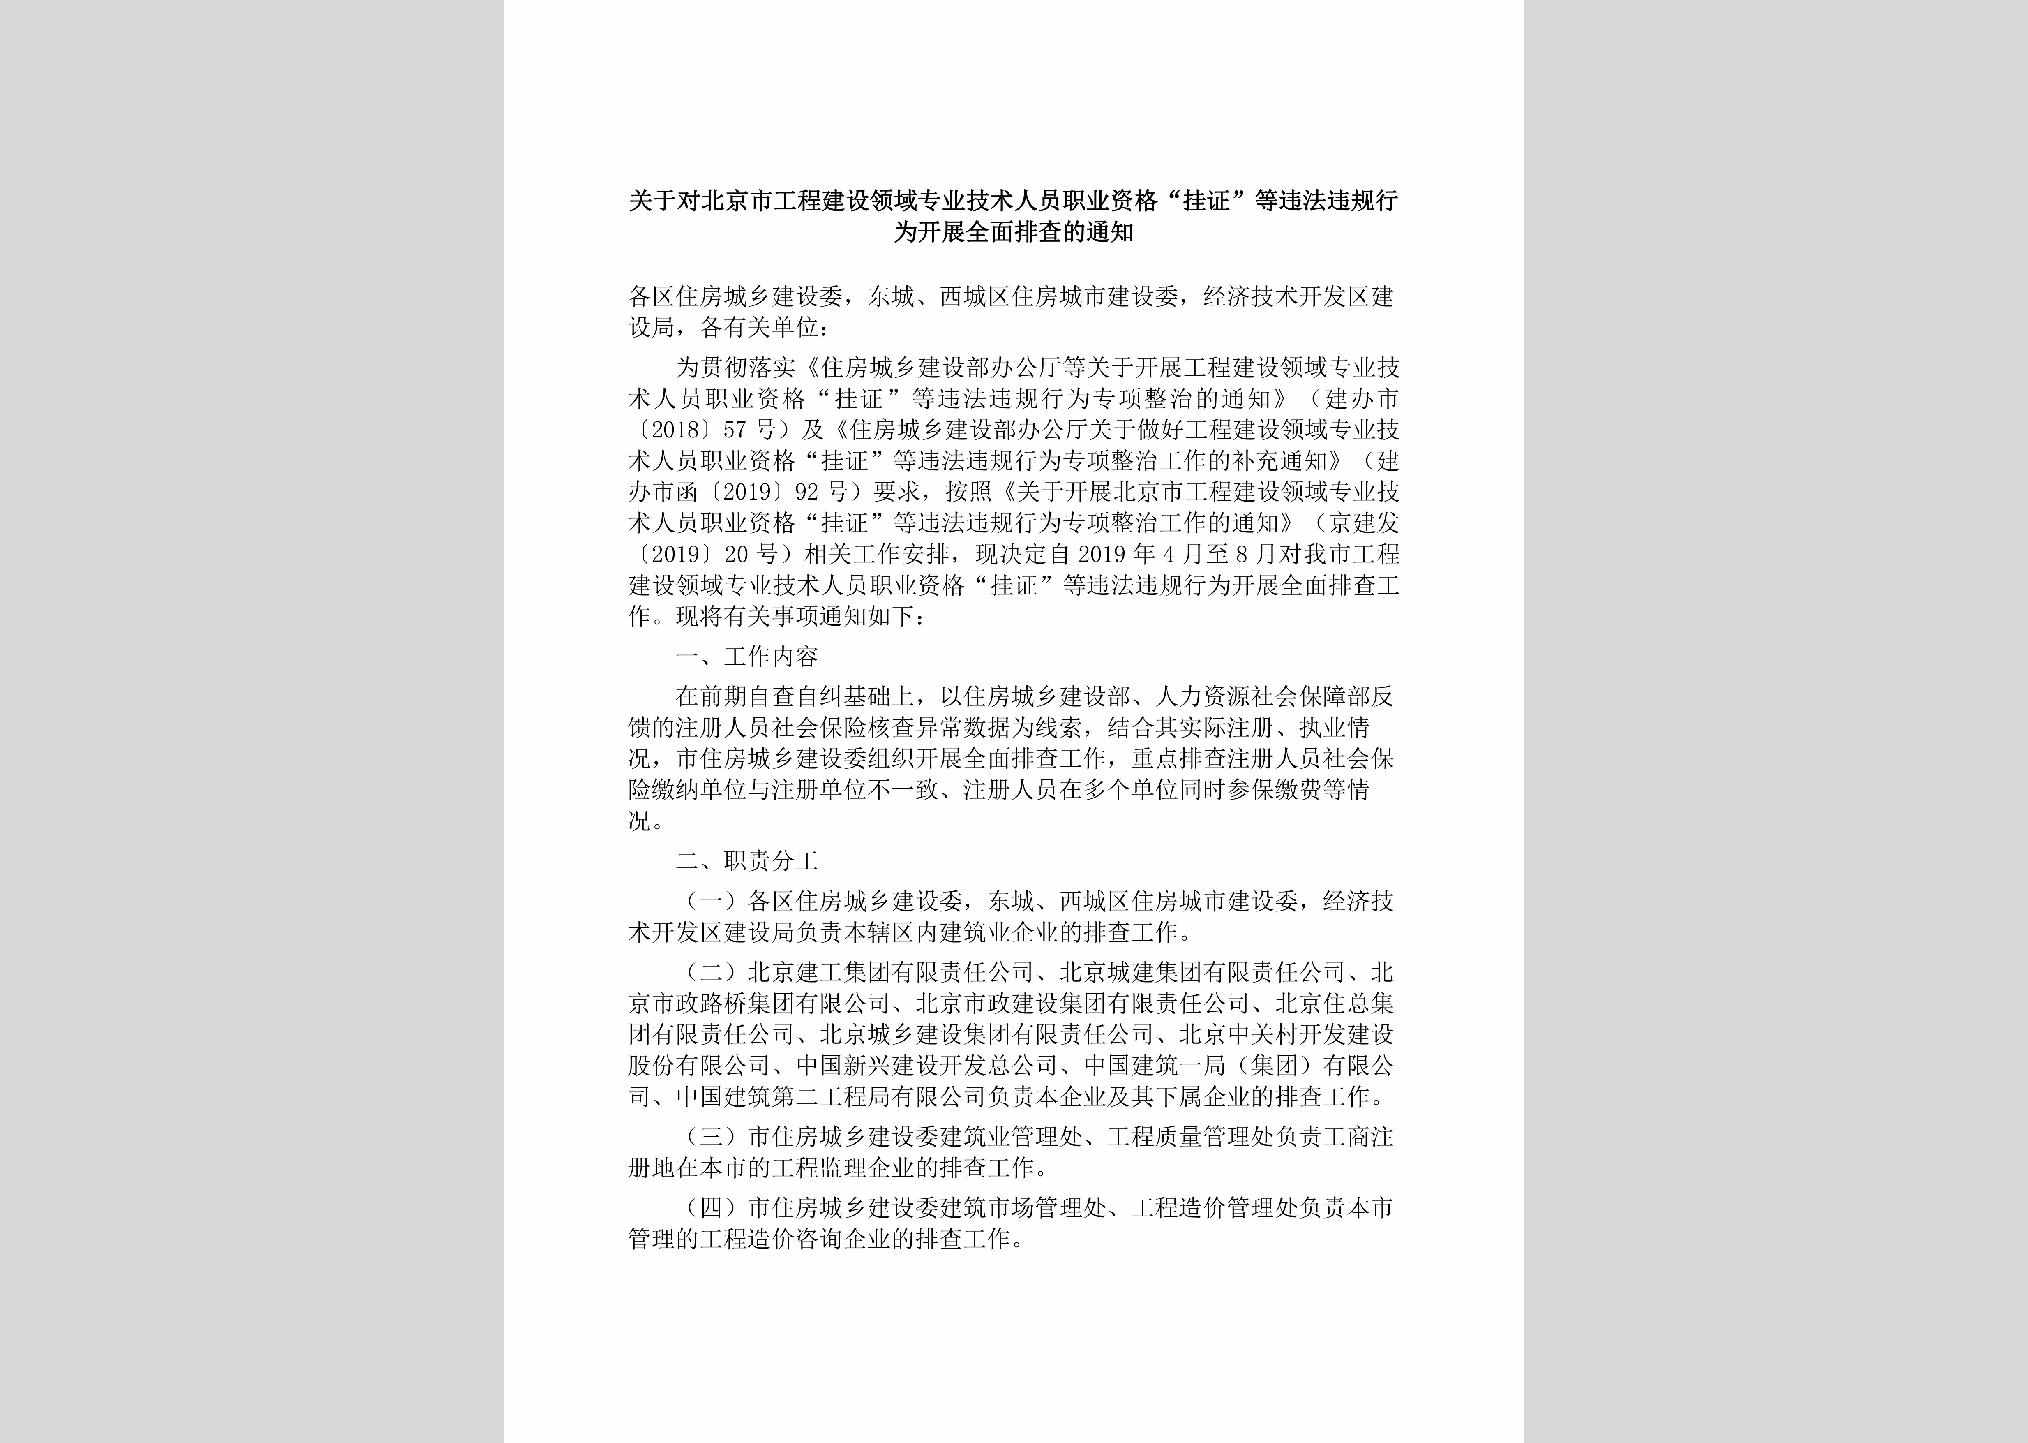 BJ-ZYJSRYZY-2019：关于对北京市工程建设领域专业技术人员职业资格“挂证”等违法违规行为开展全面排查的通知